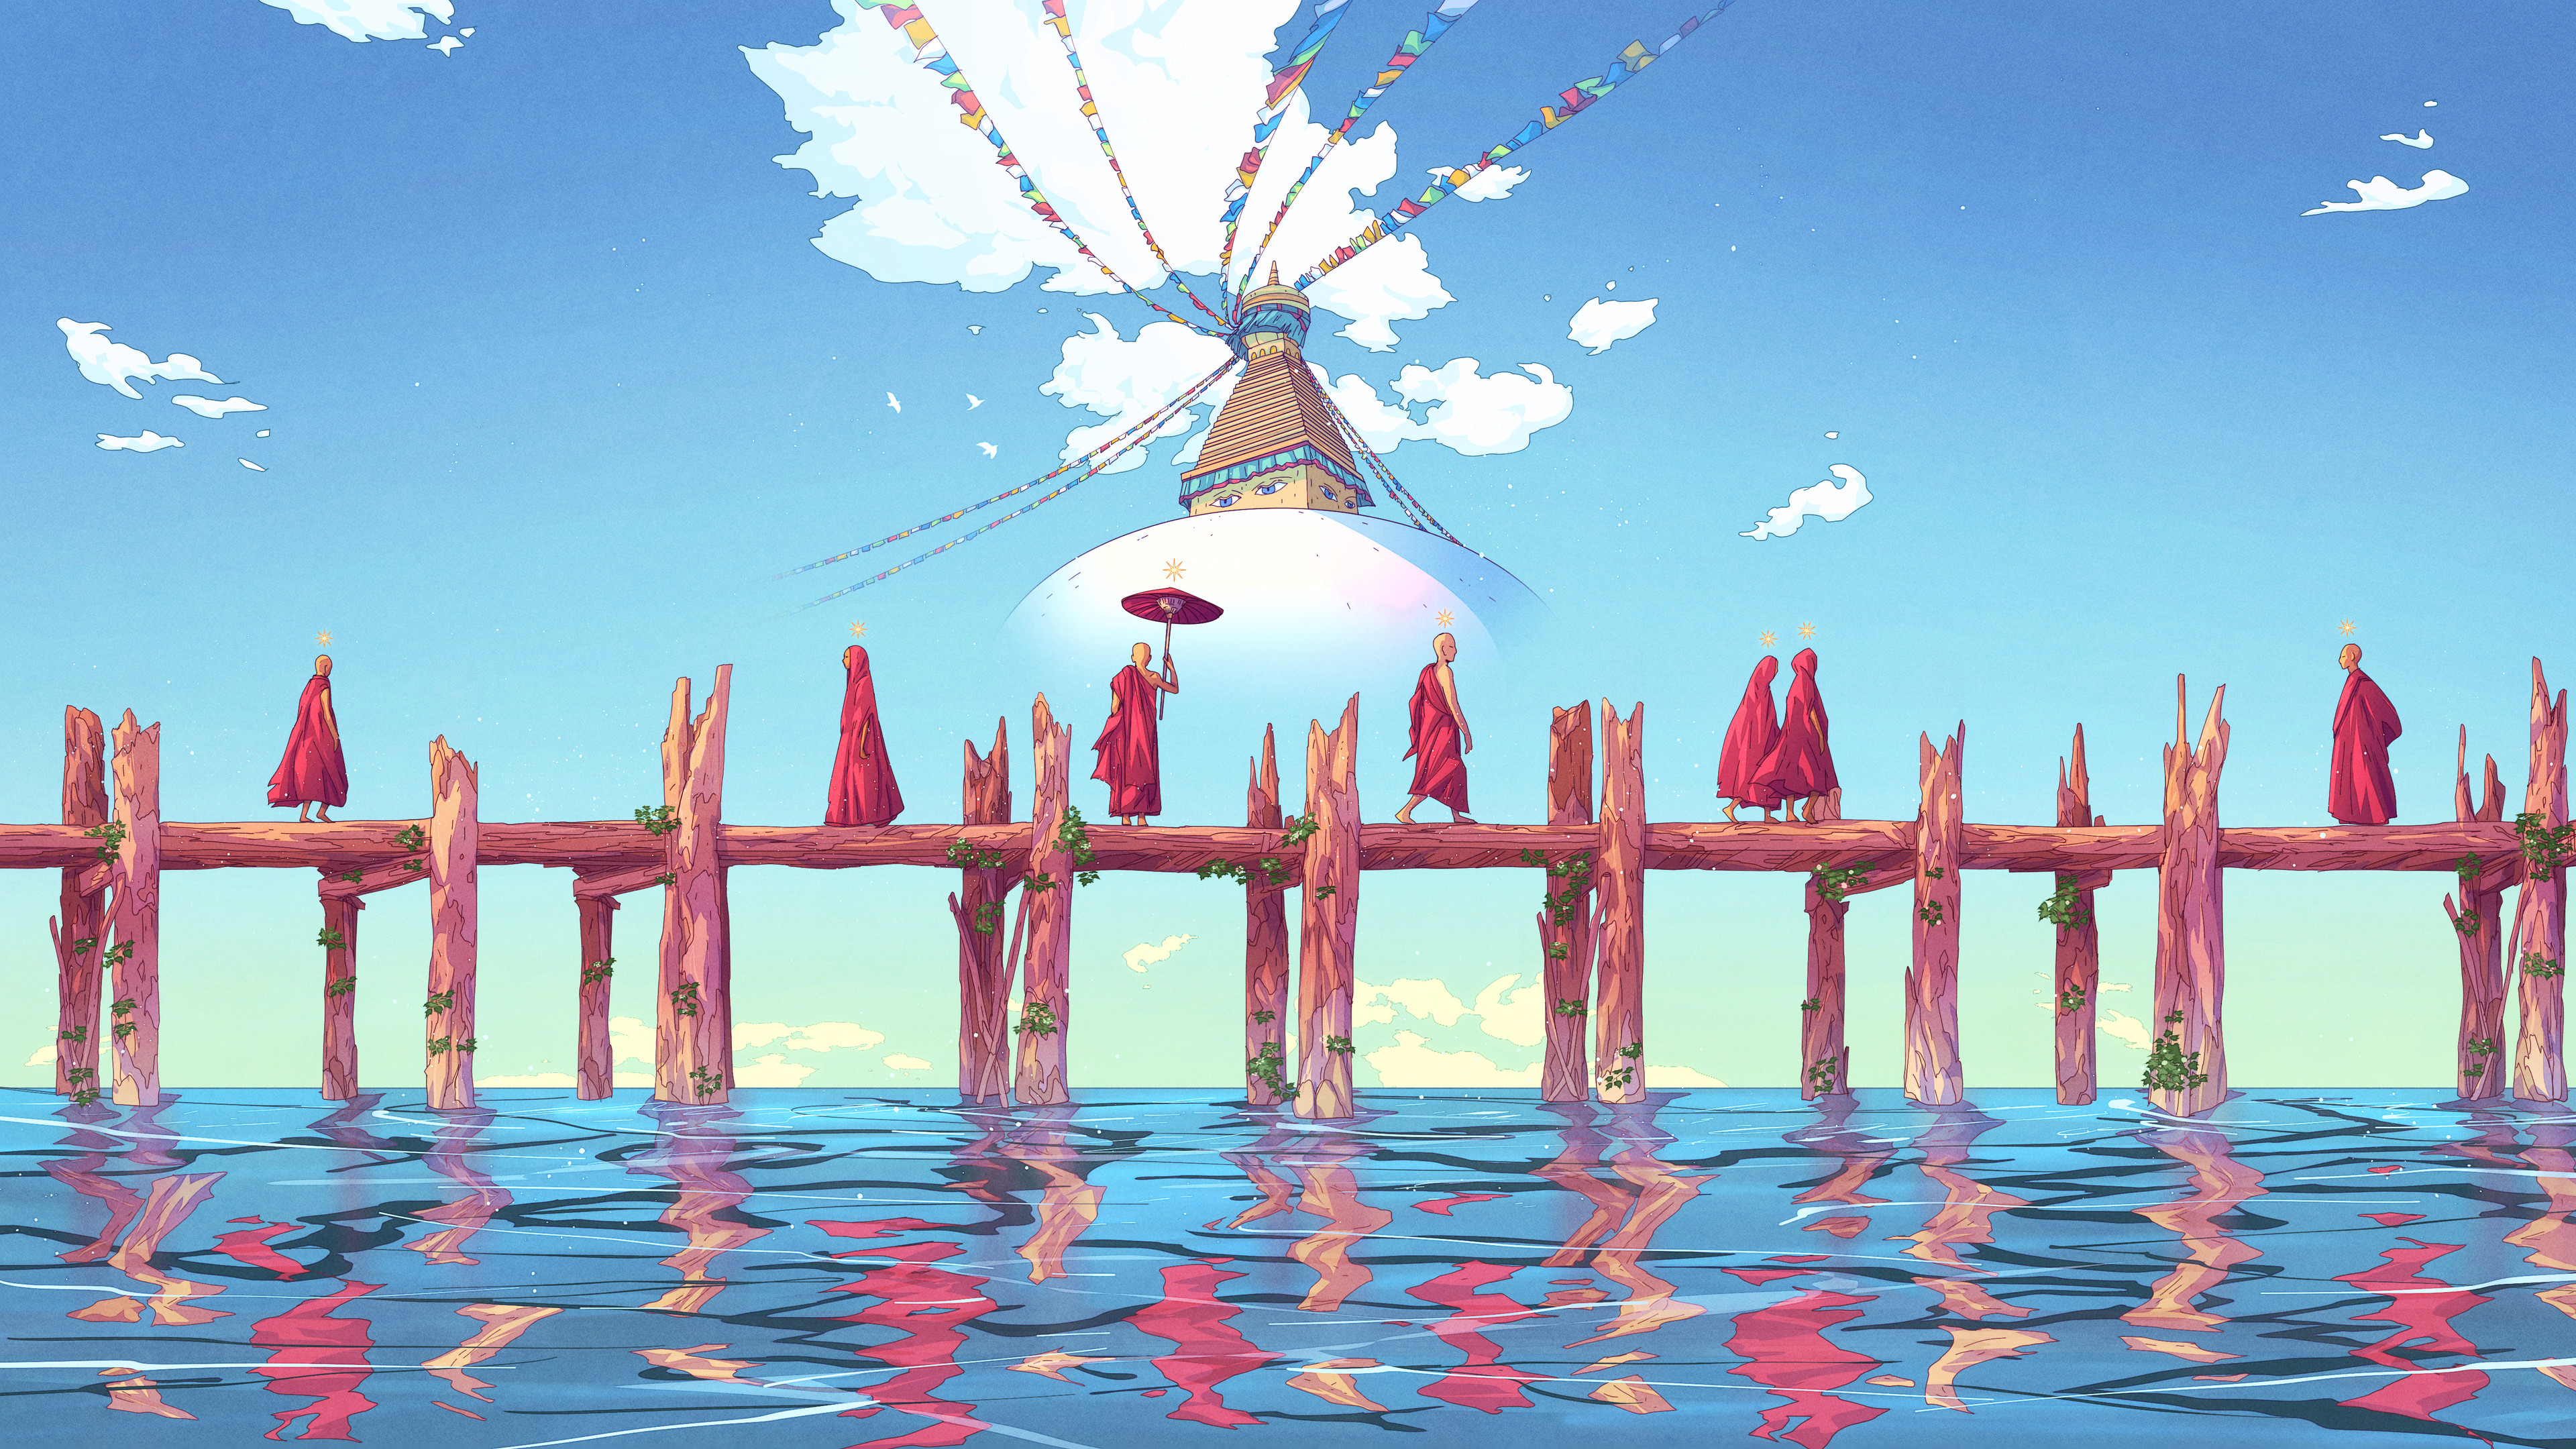 Christian Benavides Digital Art Fantasy Art Bridge River Reflection Clouds Eyes Artwork Water Sky Mo 3840x2160